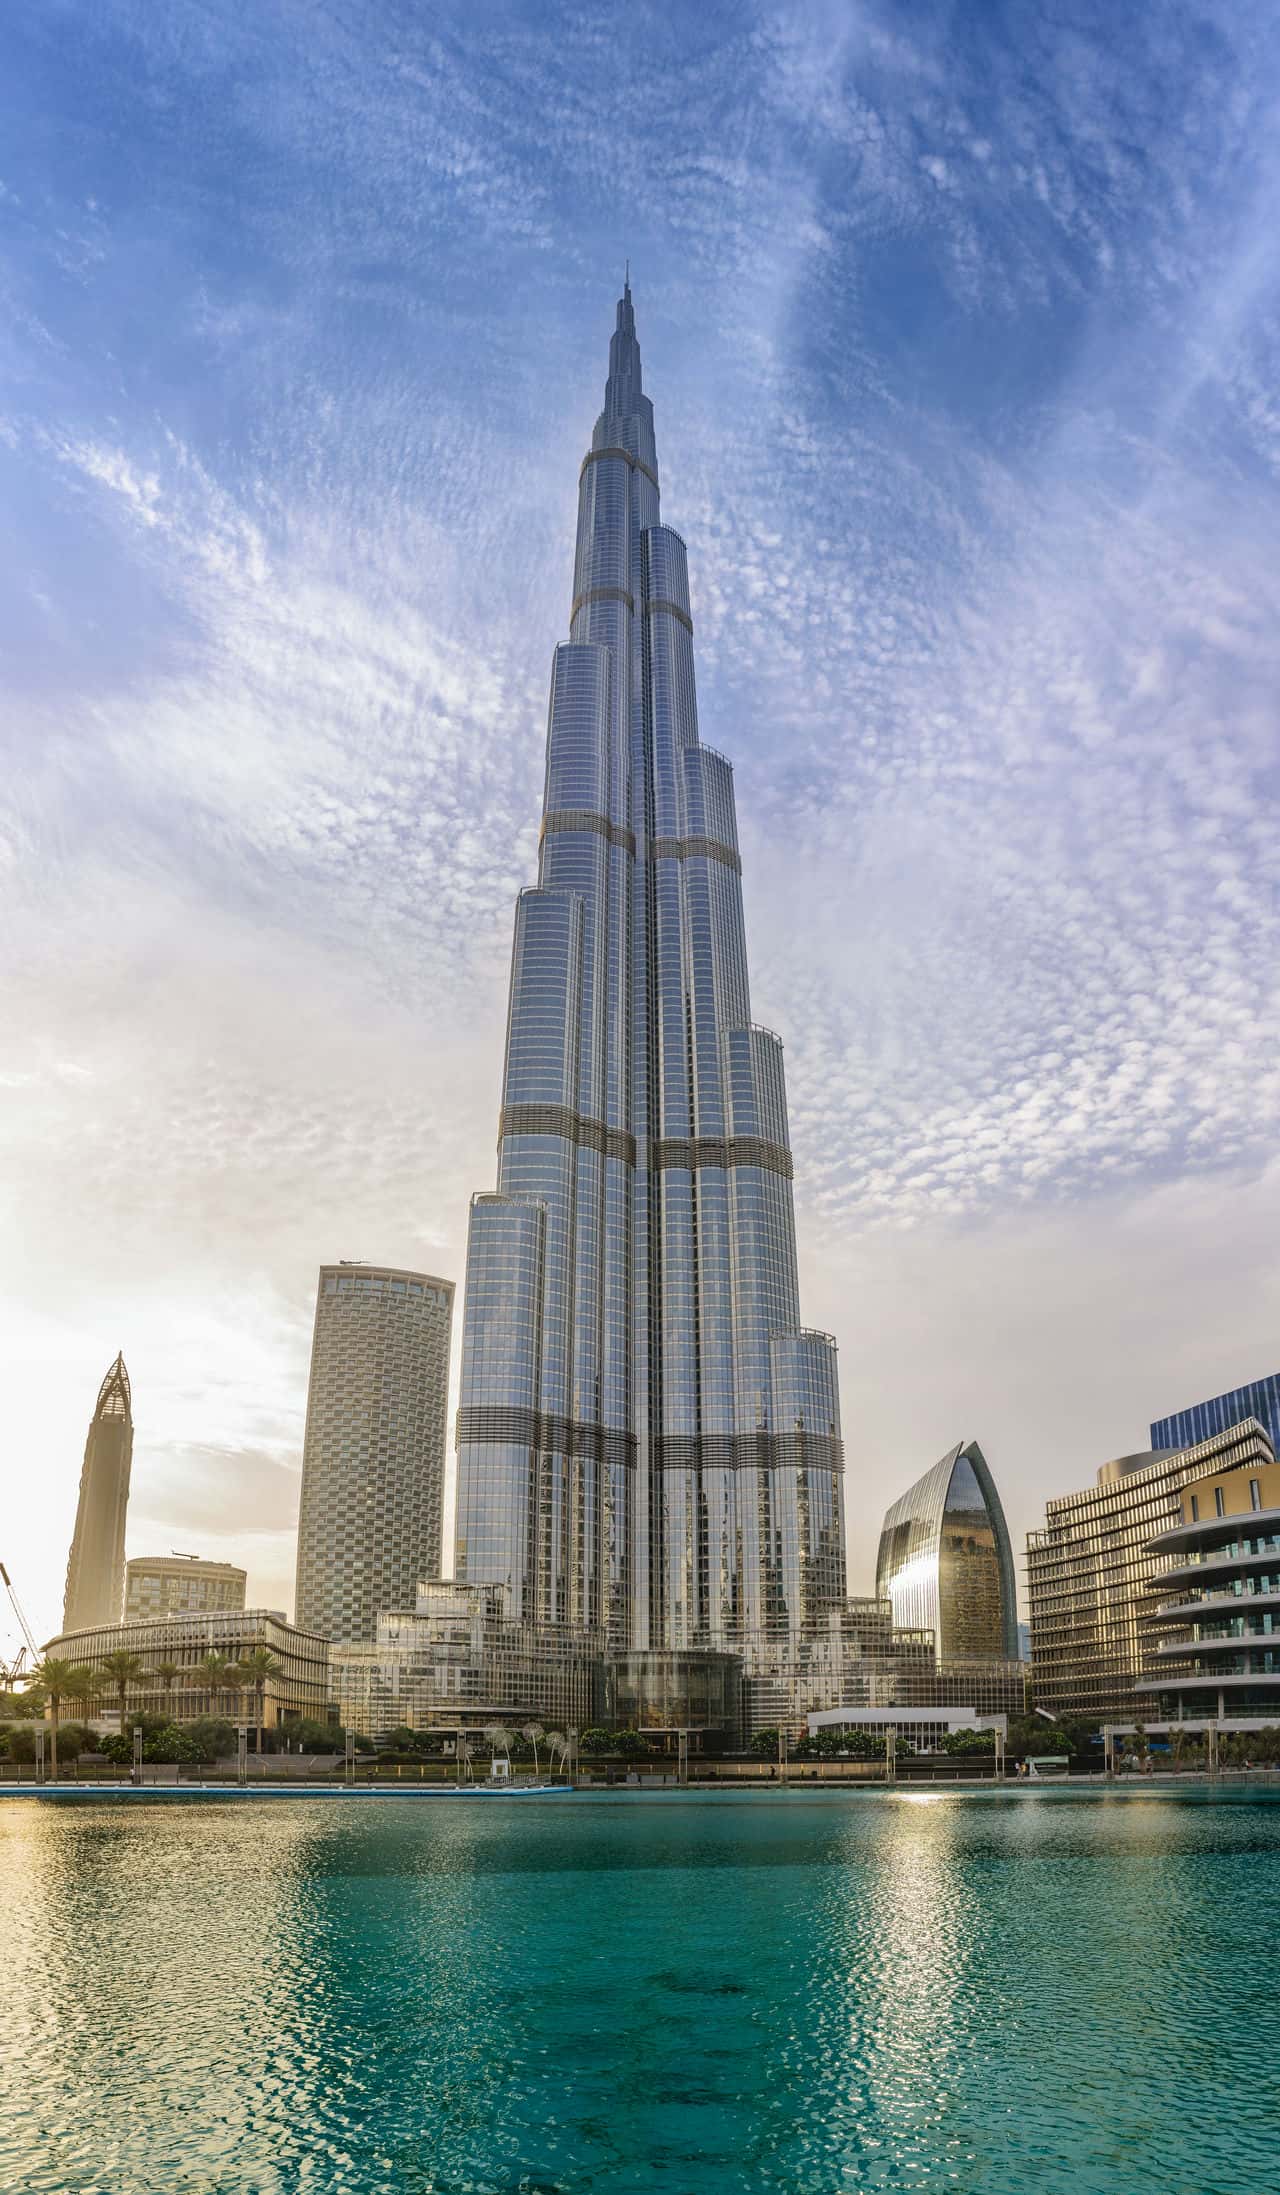 Burj khalifa structure © shukhrat umarov